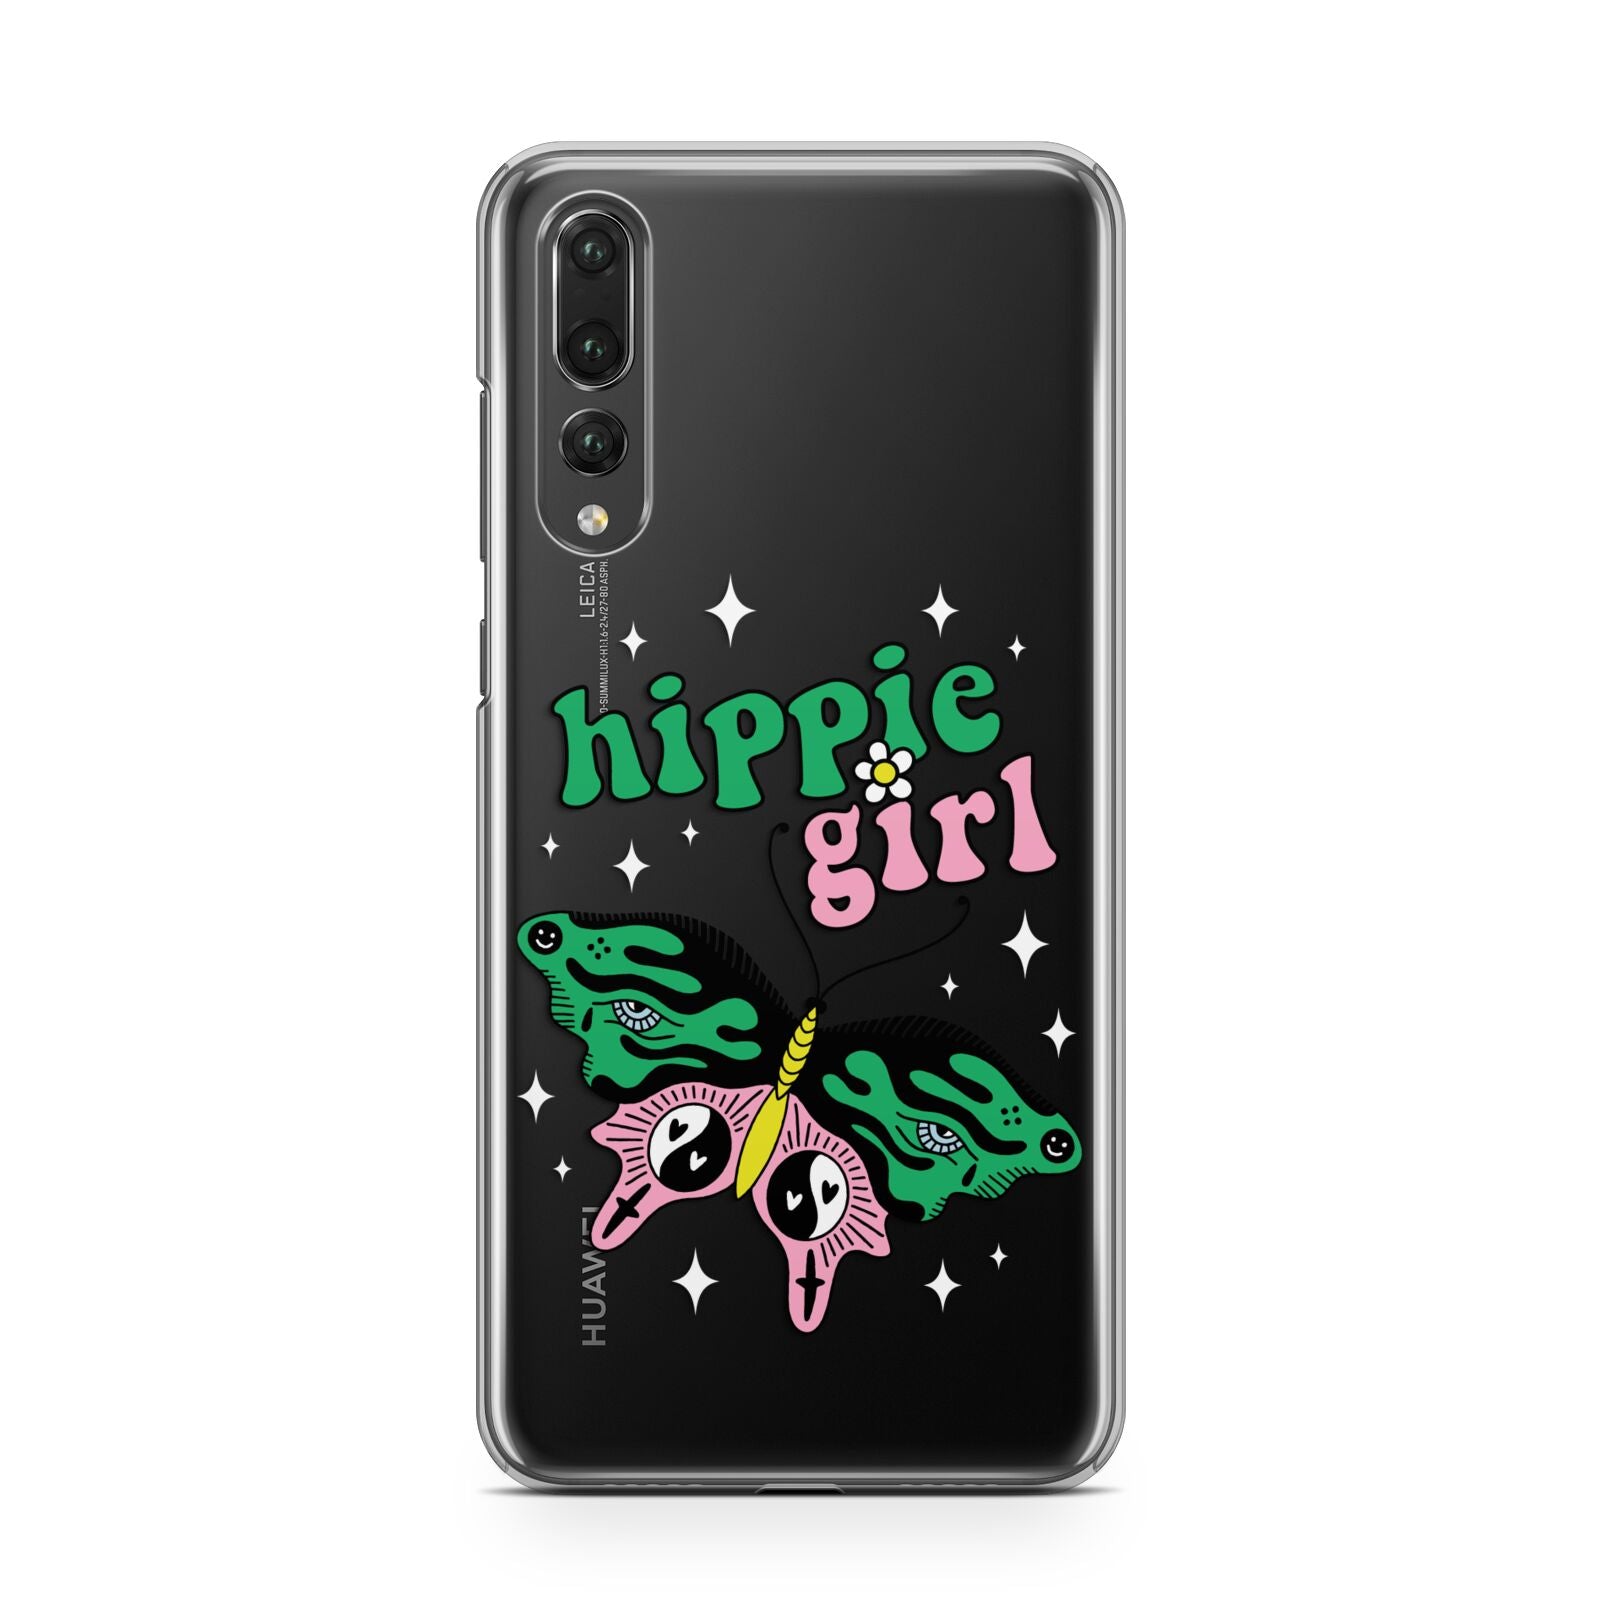 Hippie Girl Huawei P20 Pro Phone Case